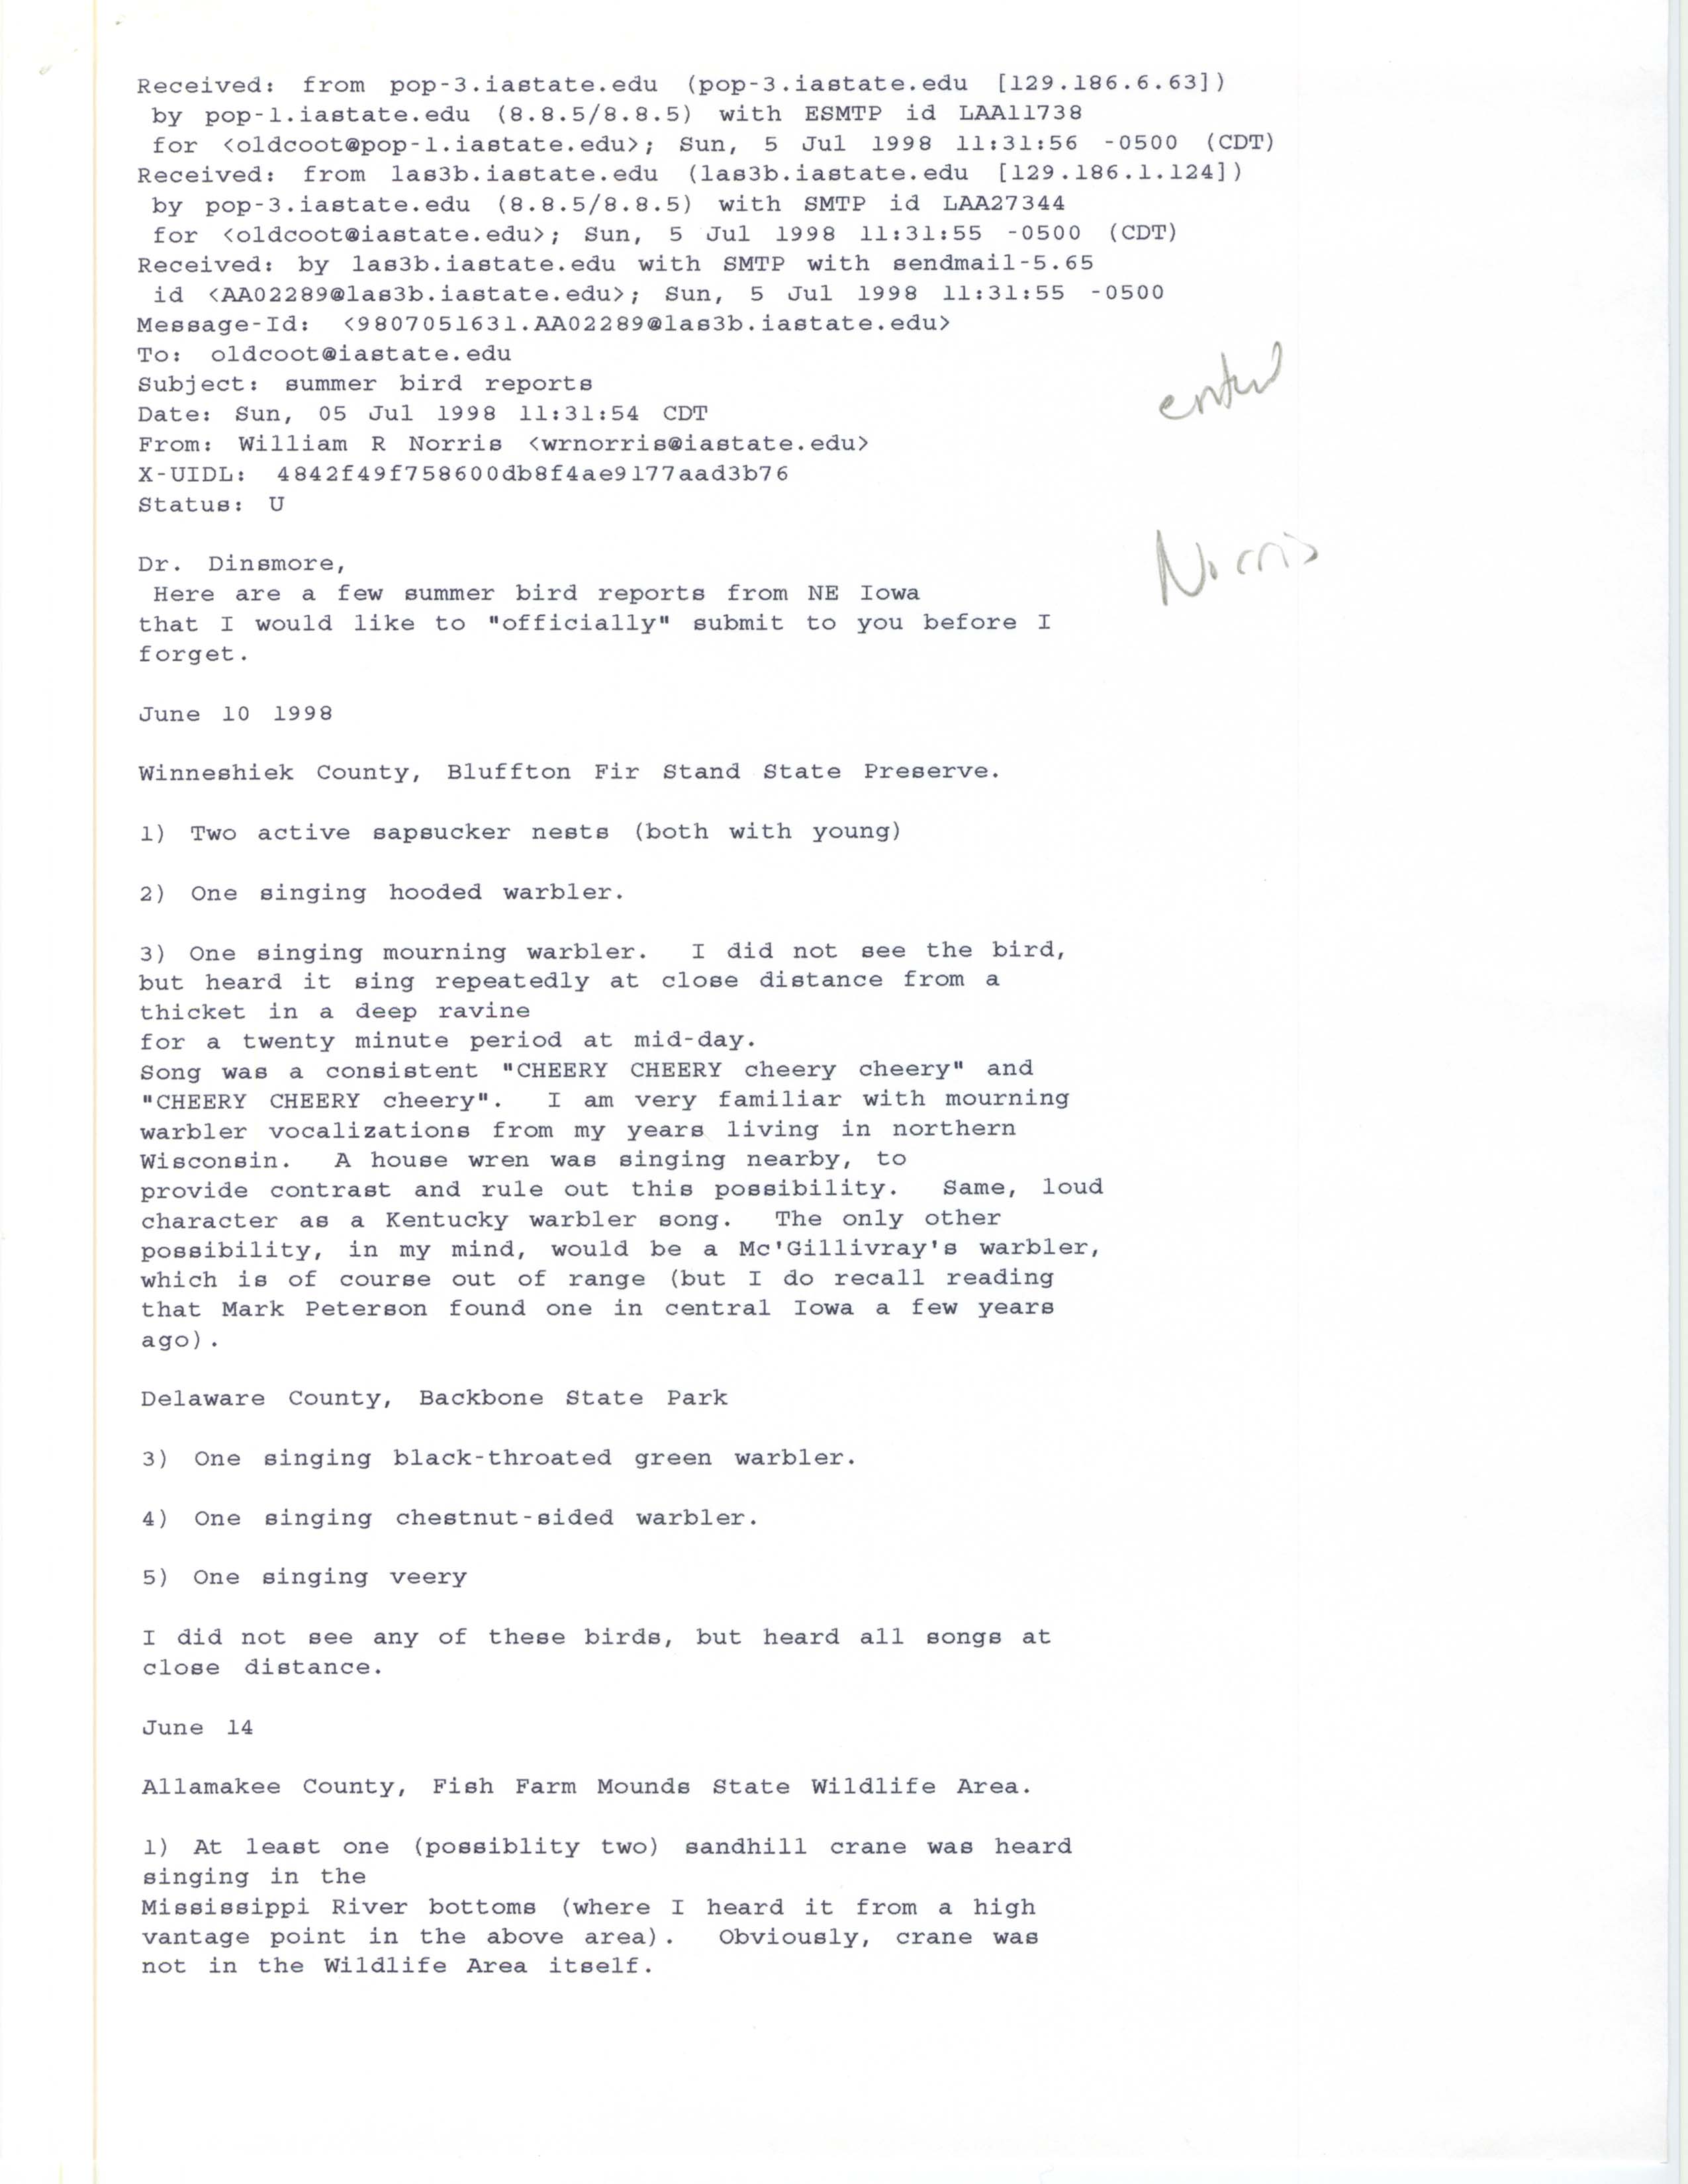 William Norris email to Jim Dinsmore regarding summer bird reports, July 5, 1998